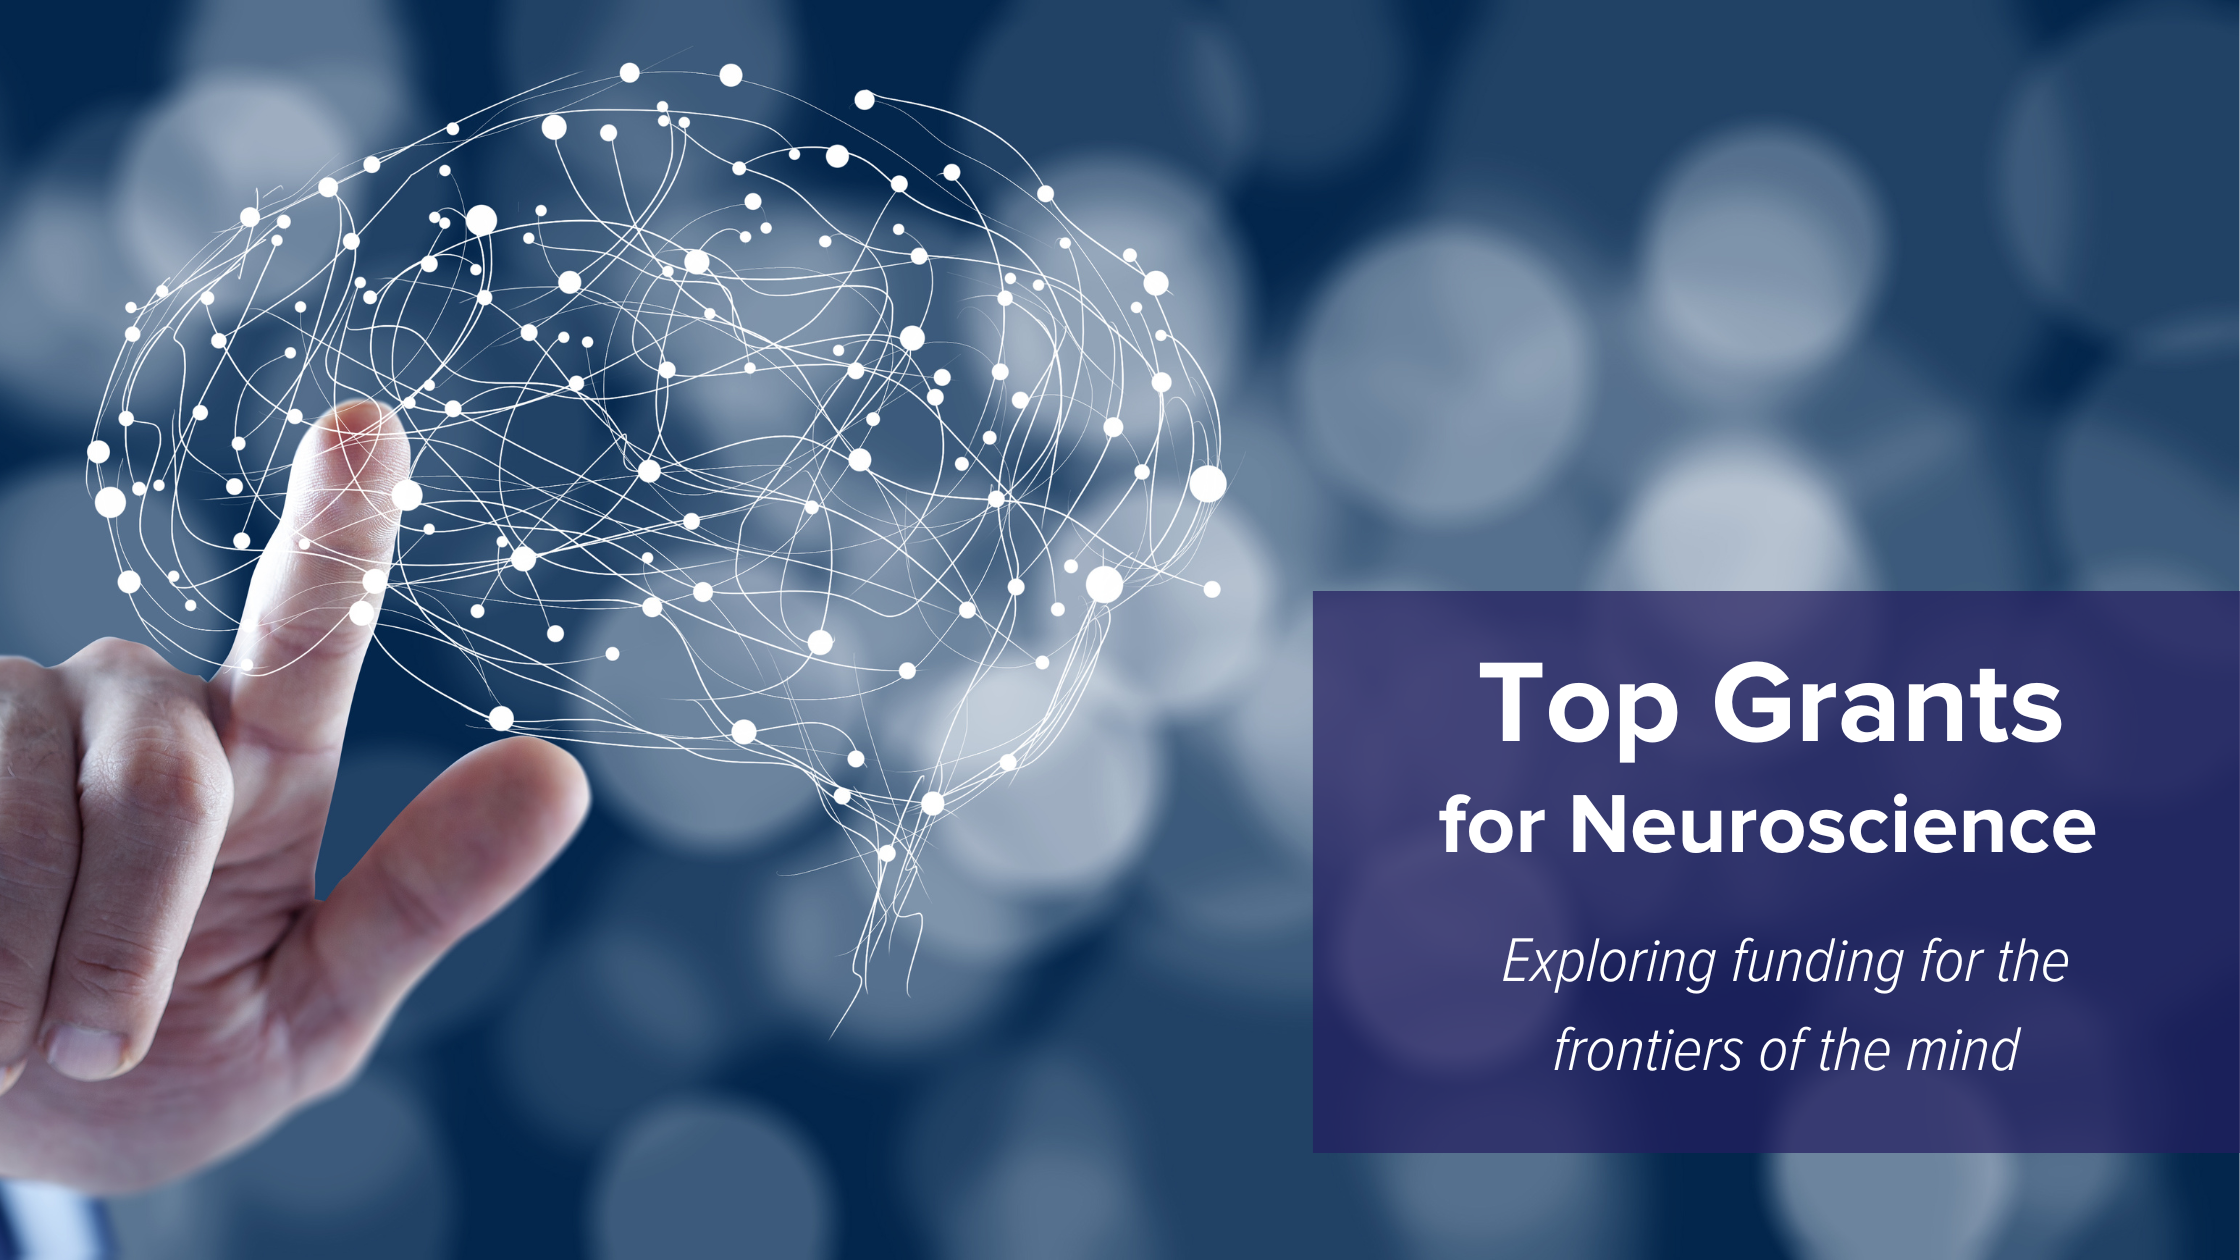 Top grants for neuroscience